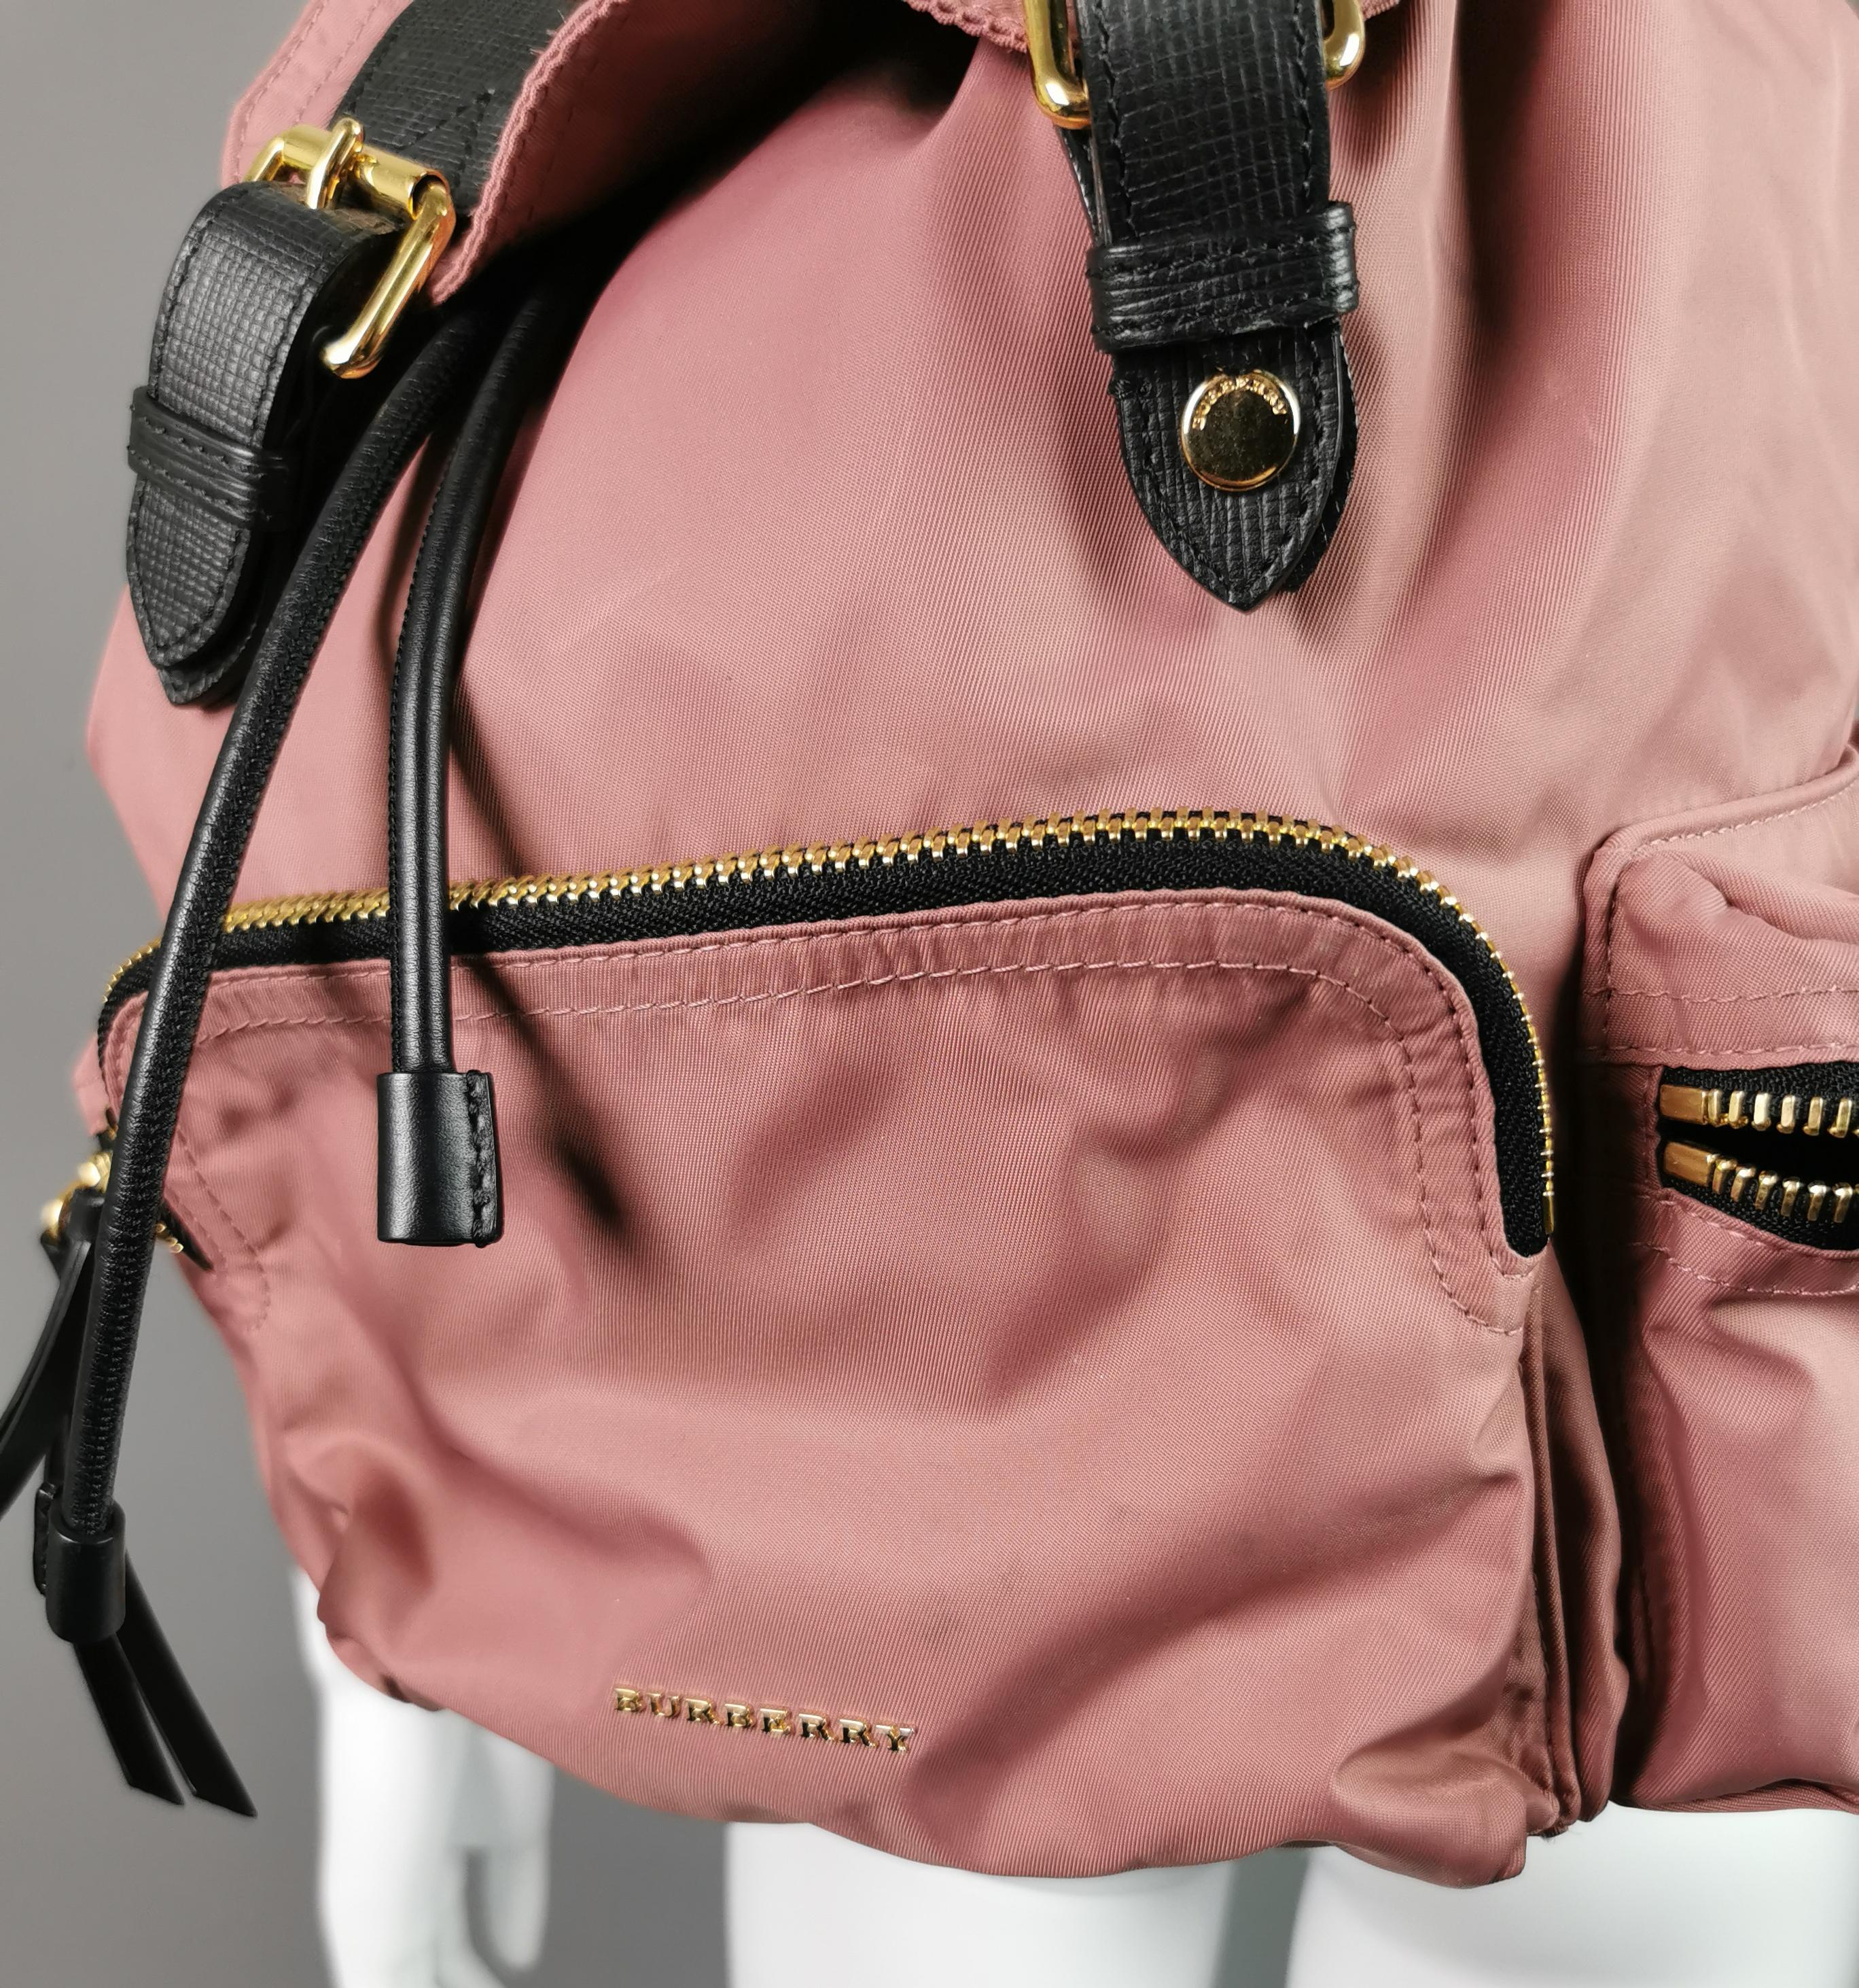 Burberry The Rucksack, pink nylon backpack, gold tone hardware  10